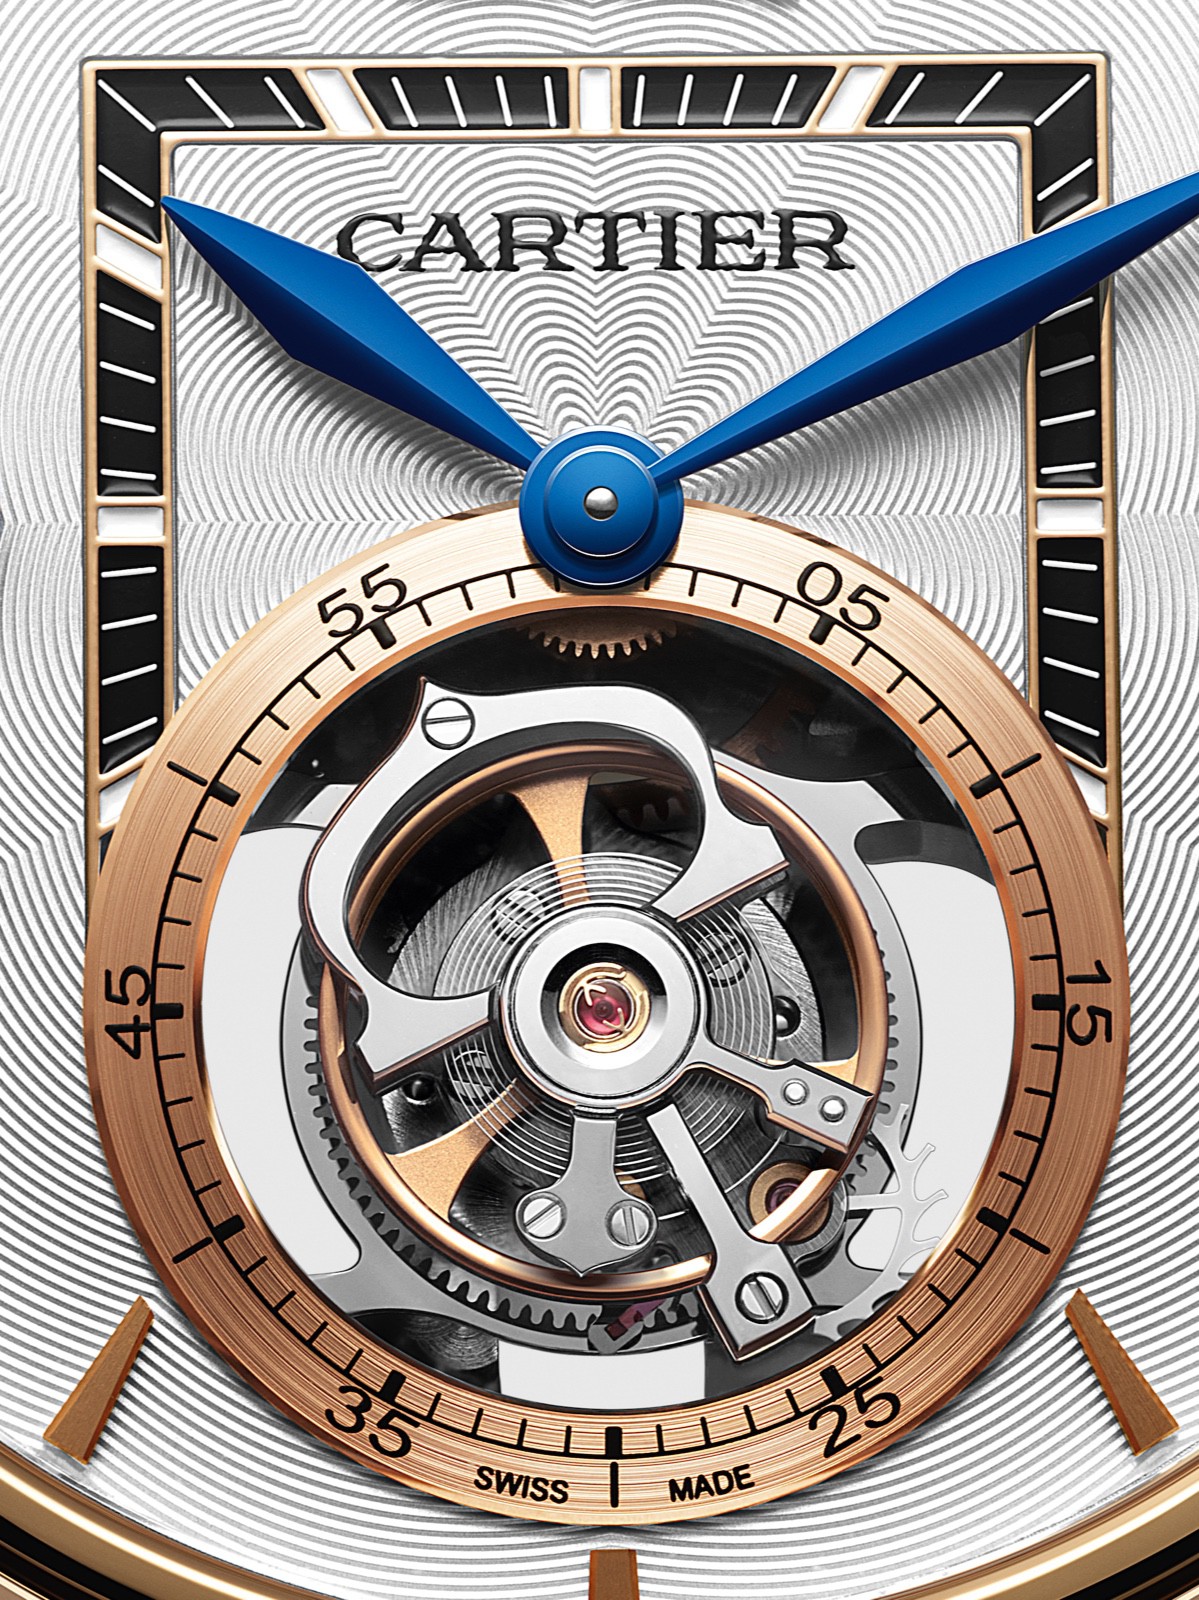 26 Pasha de Cartier系列浮动式陀飞轮腕表的“C”字形陀飞轮框架由卡地亚特别为其设计 2.jpg